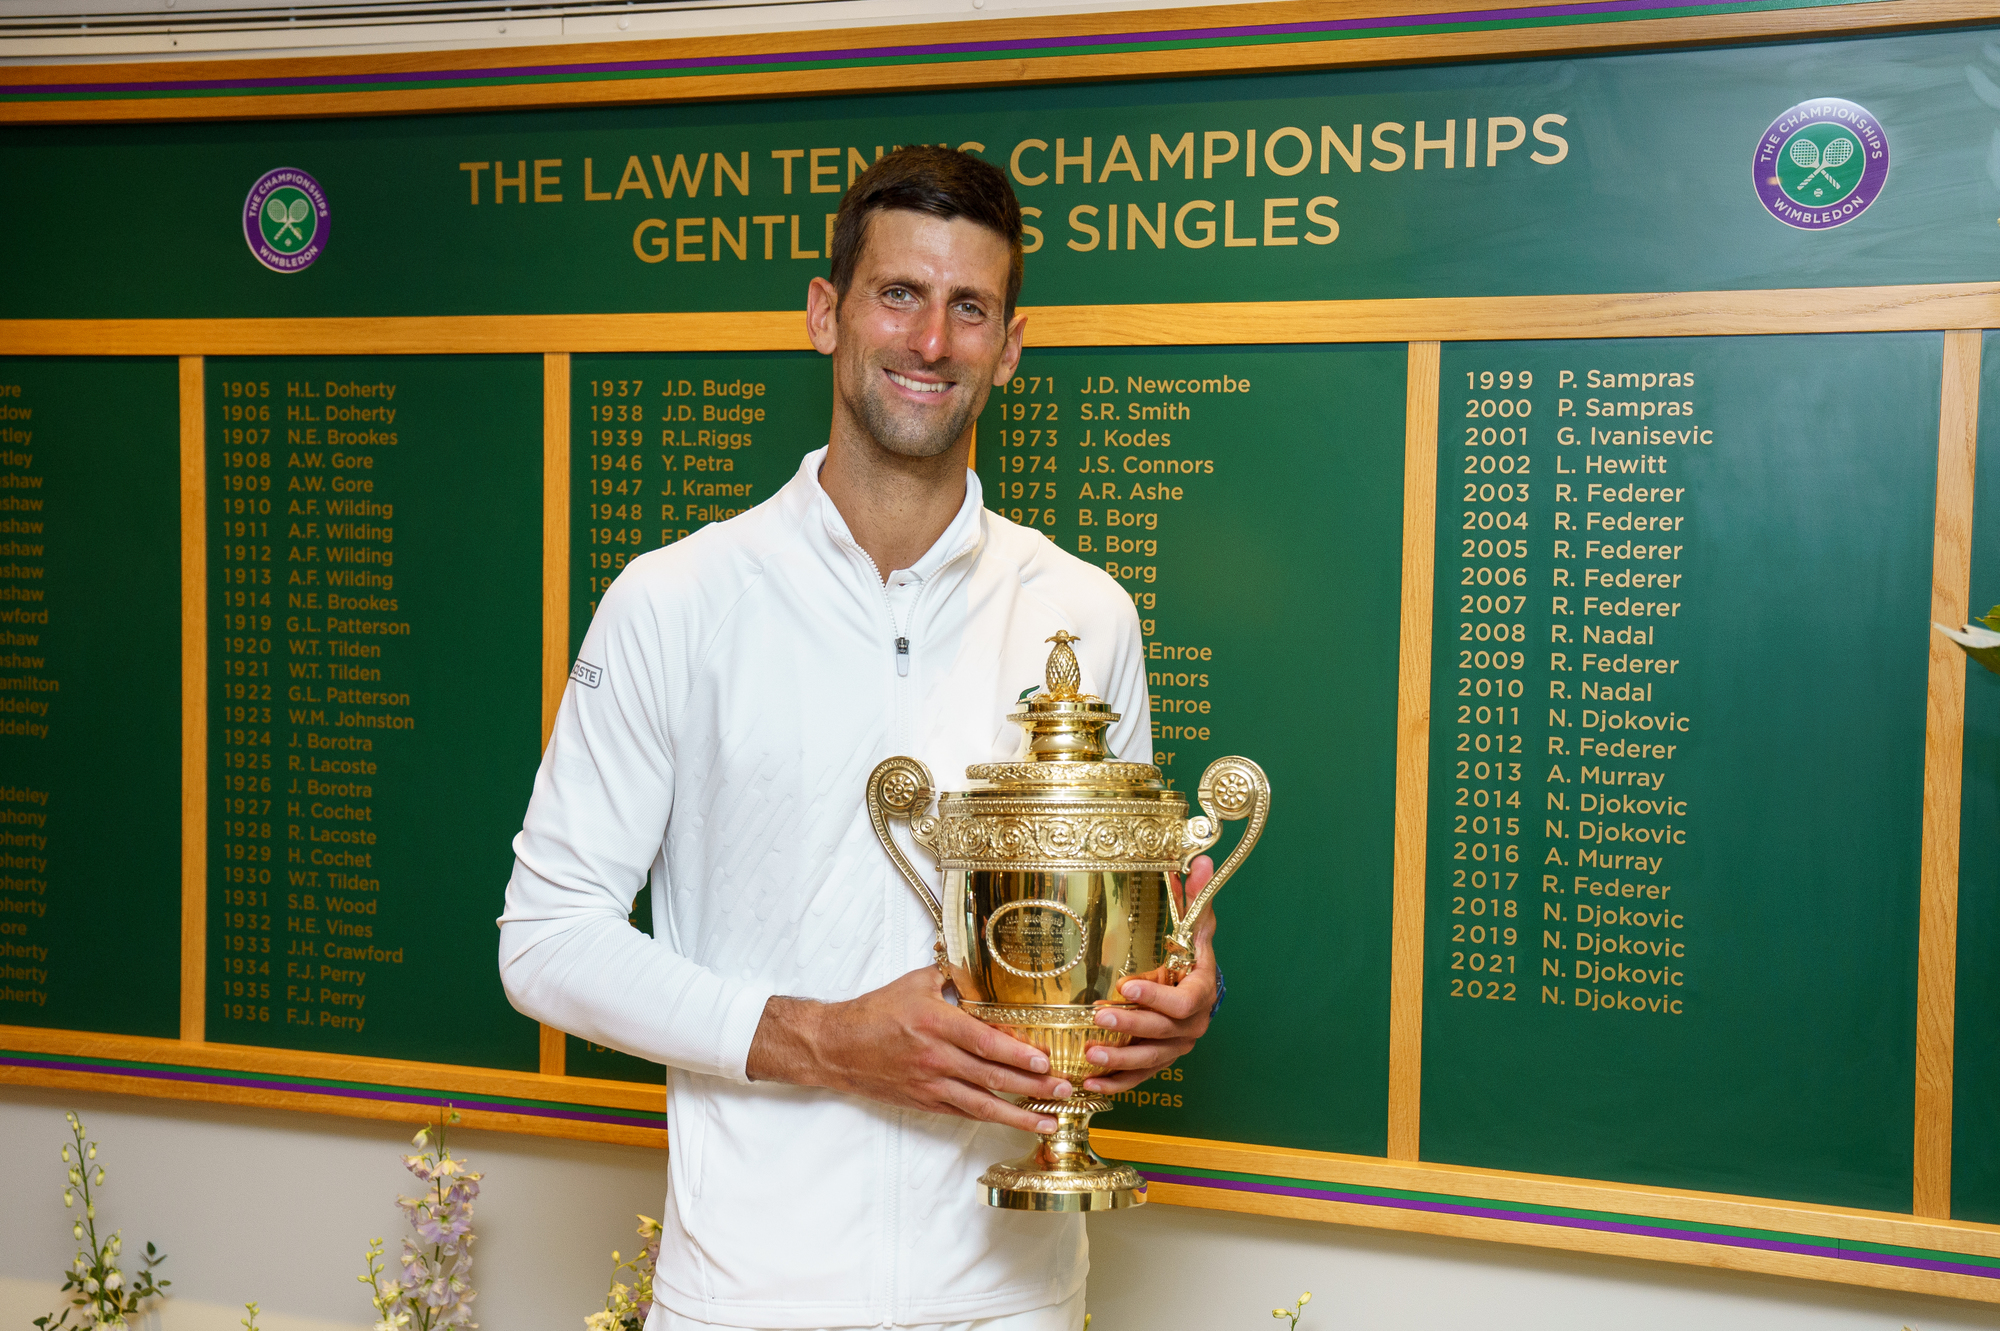 Djokovic levantó su cuarto Wimbledon de forma consecutiva este fin de semana. Foto: Wimbledon.